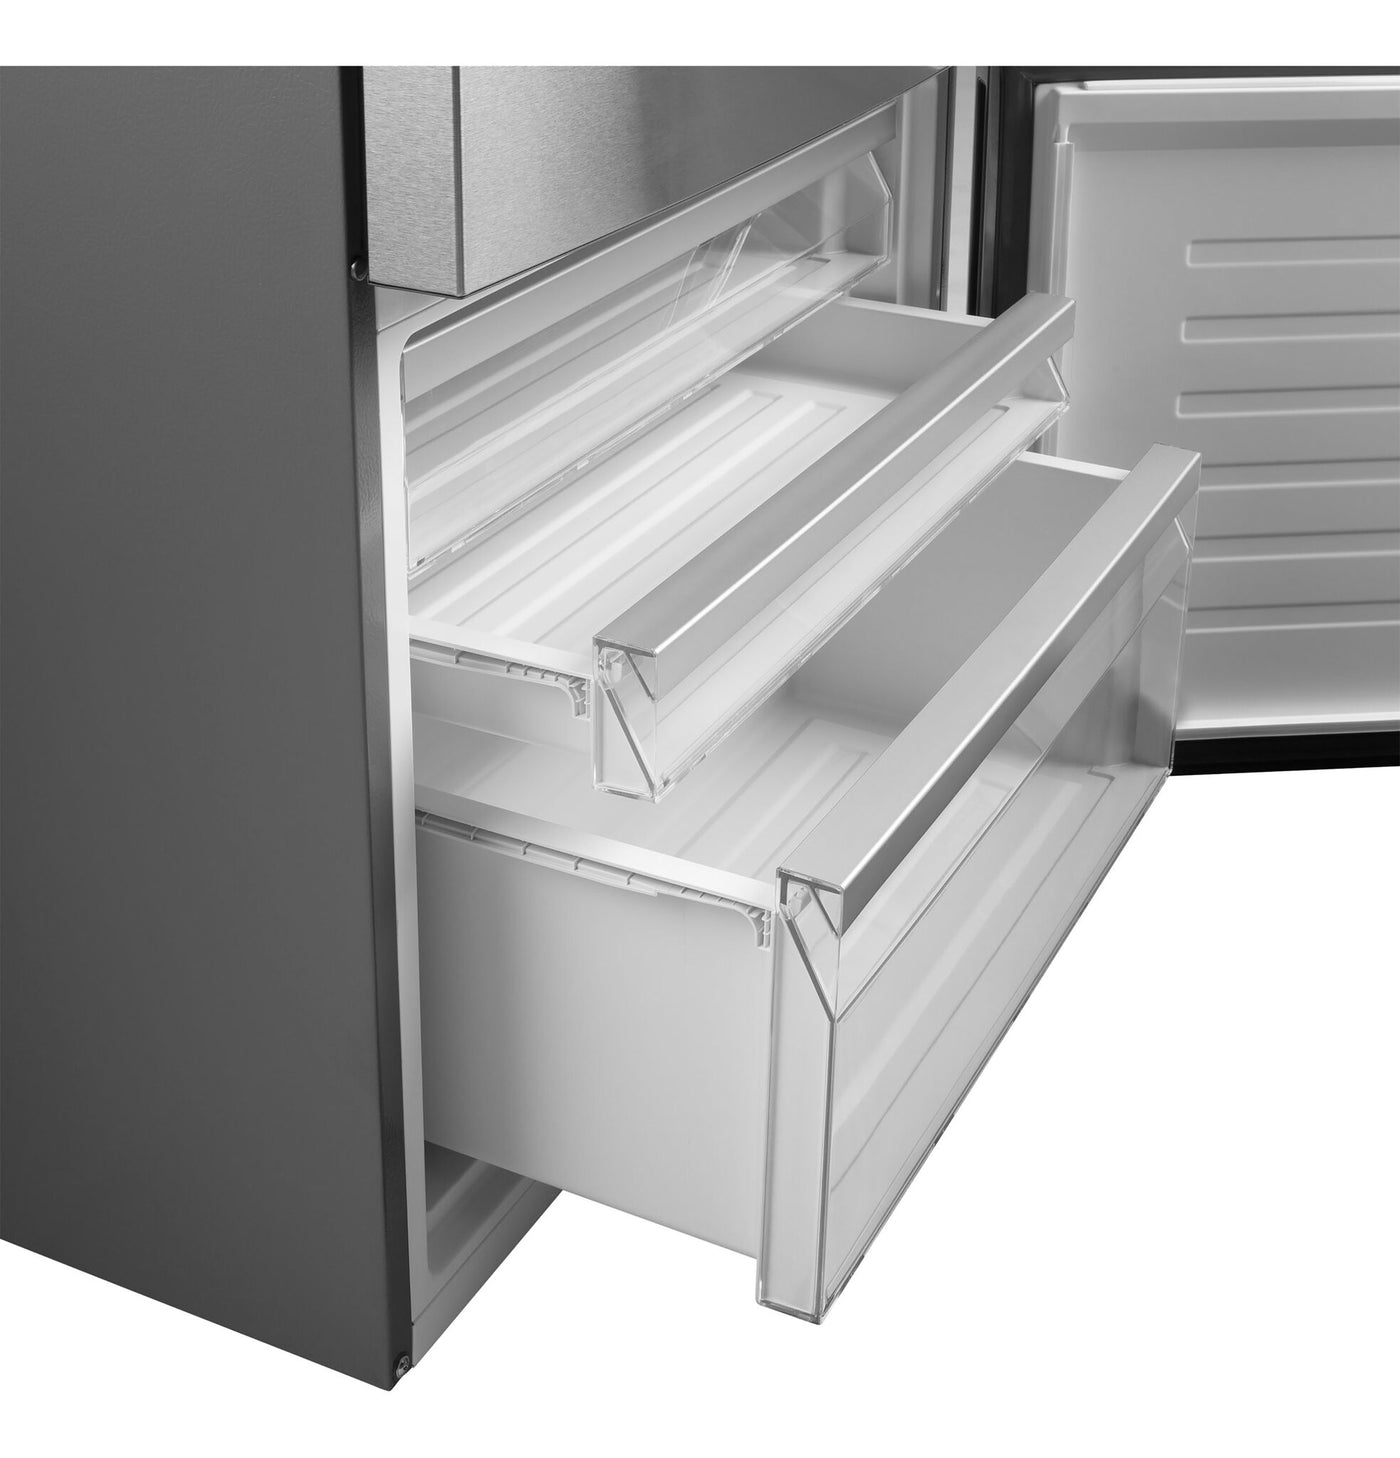 GE Fingerprint Resistant Stainless Steel Bottom Mount Refrigerator (17.7 Cu. Ft.)- GBE17HYRFS